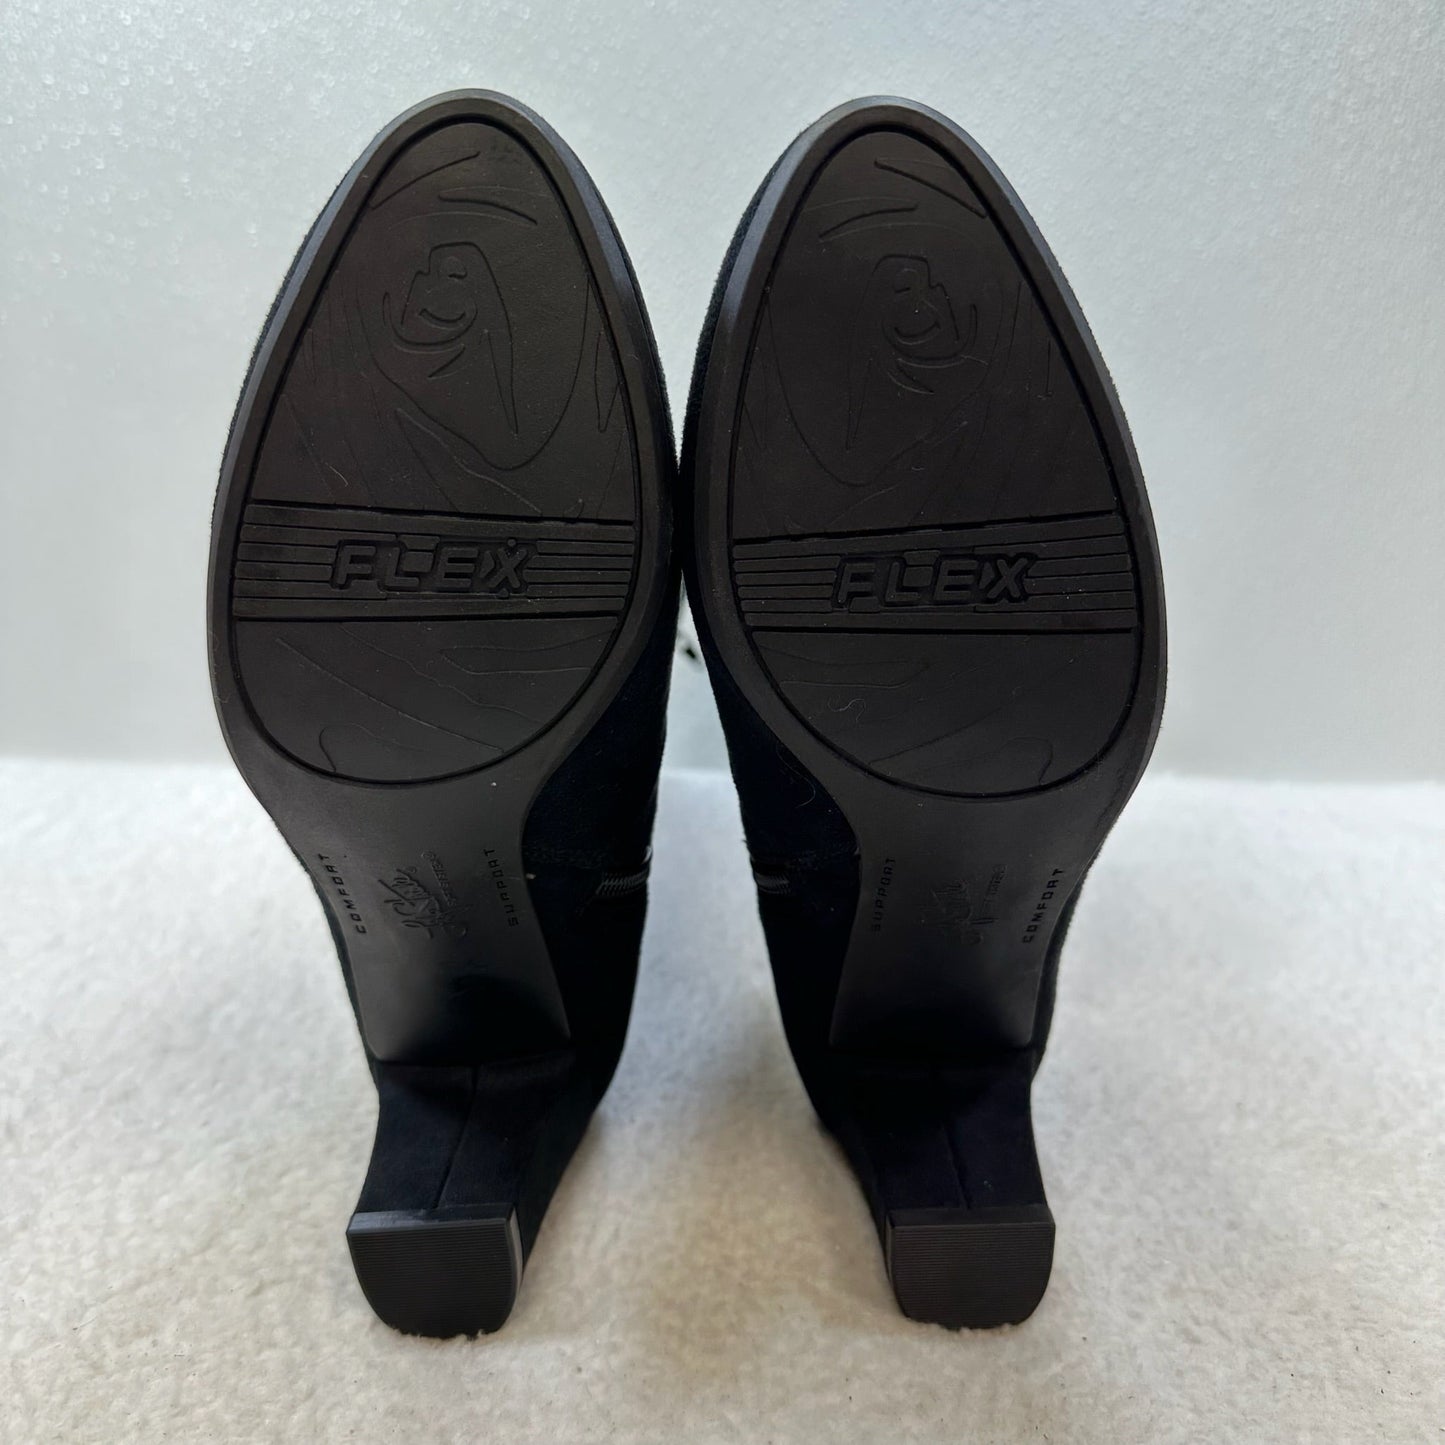 Black Boots Mid-calf Heels Life Stride, Size 8.5